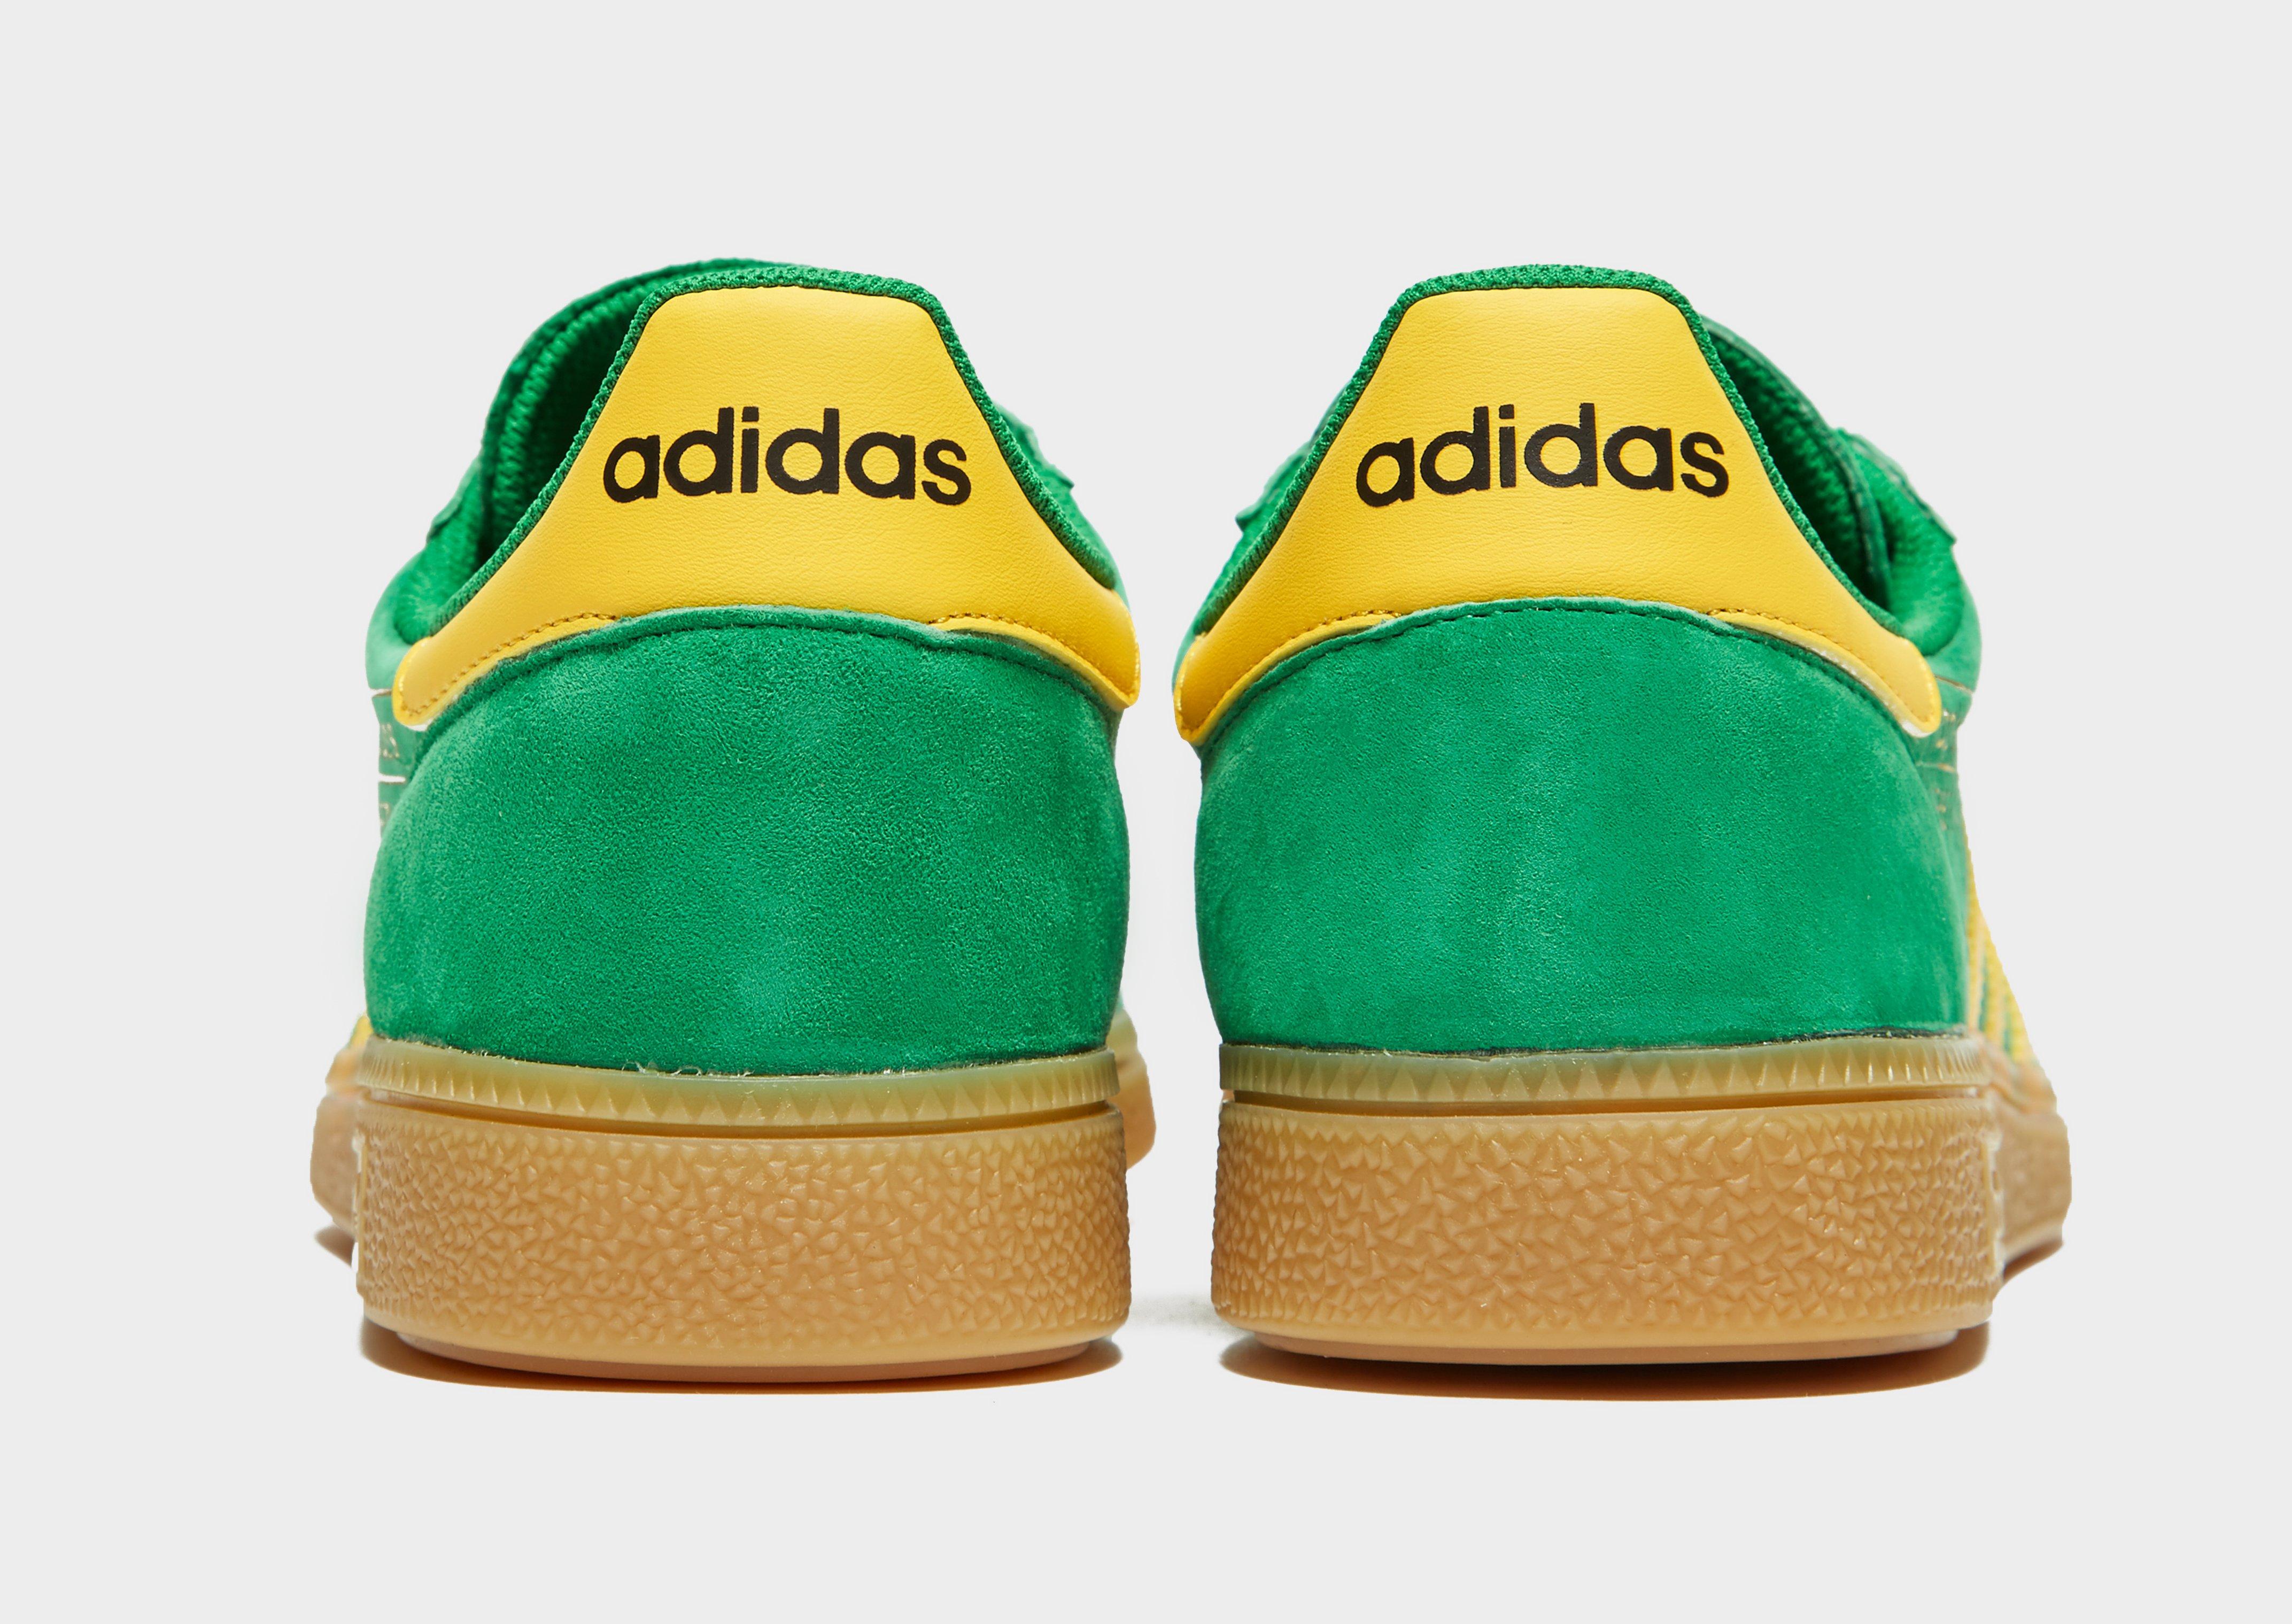 adidas spezial green yellow